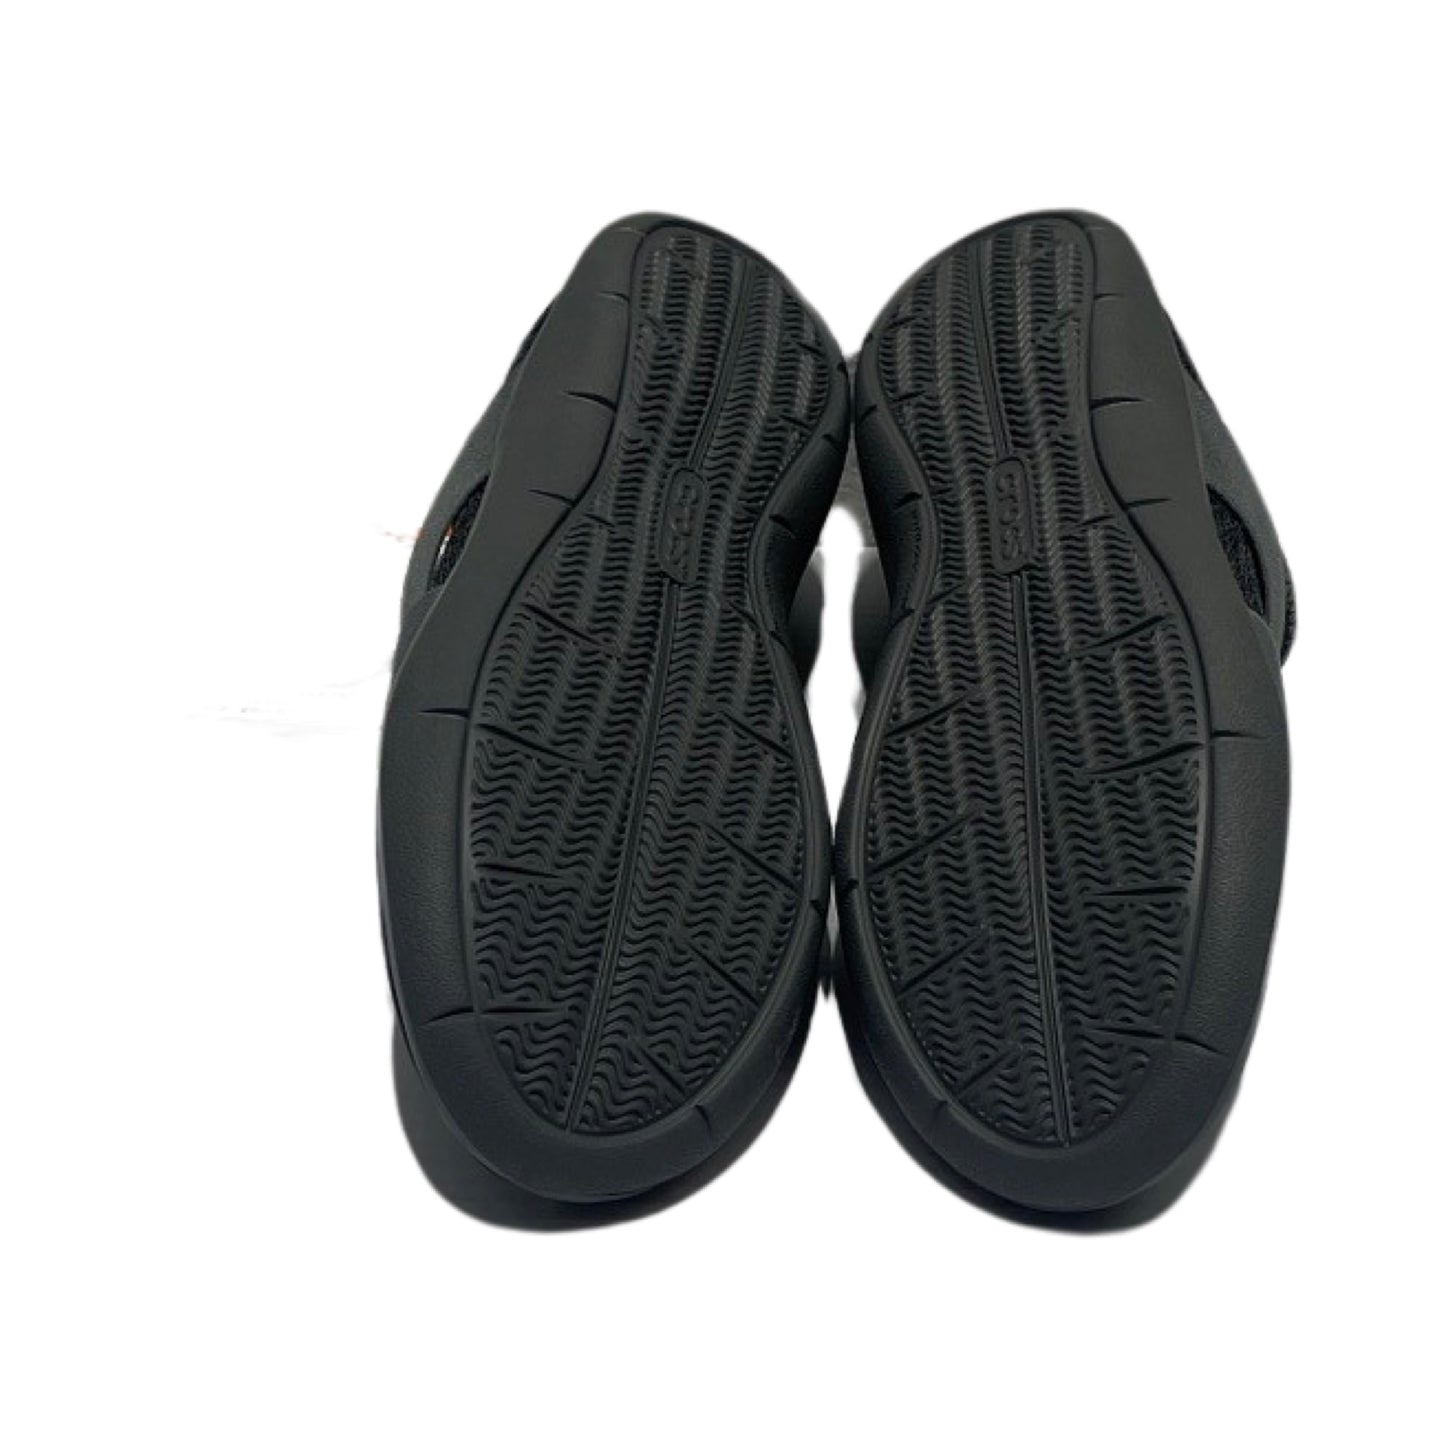 Shoes Flats Ballet By Crocs  Size: 6